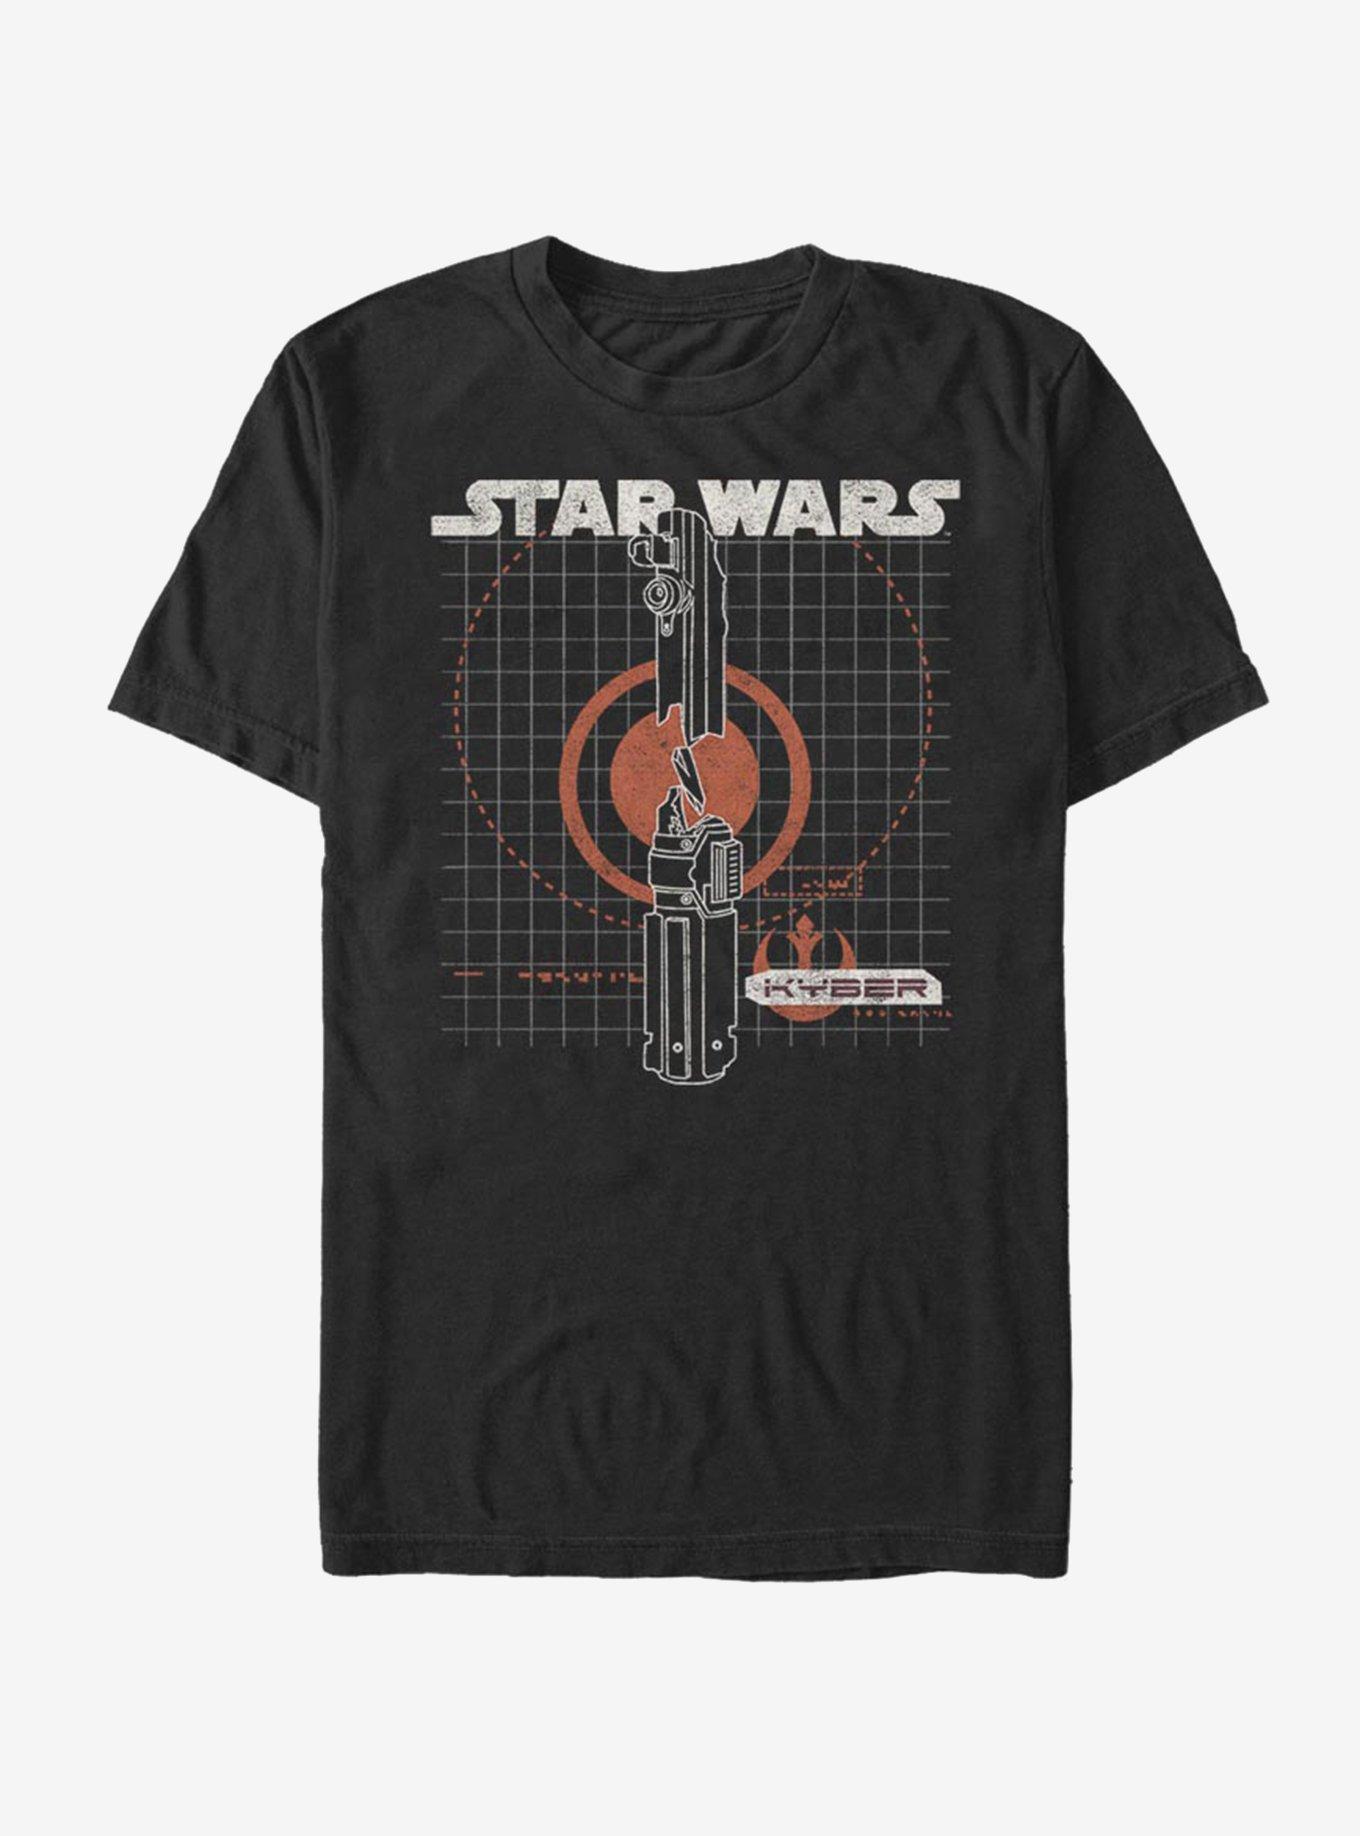 Star Wars: The Rise of Skywalker Kyber T-Shirt